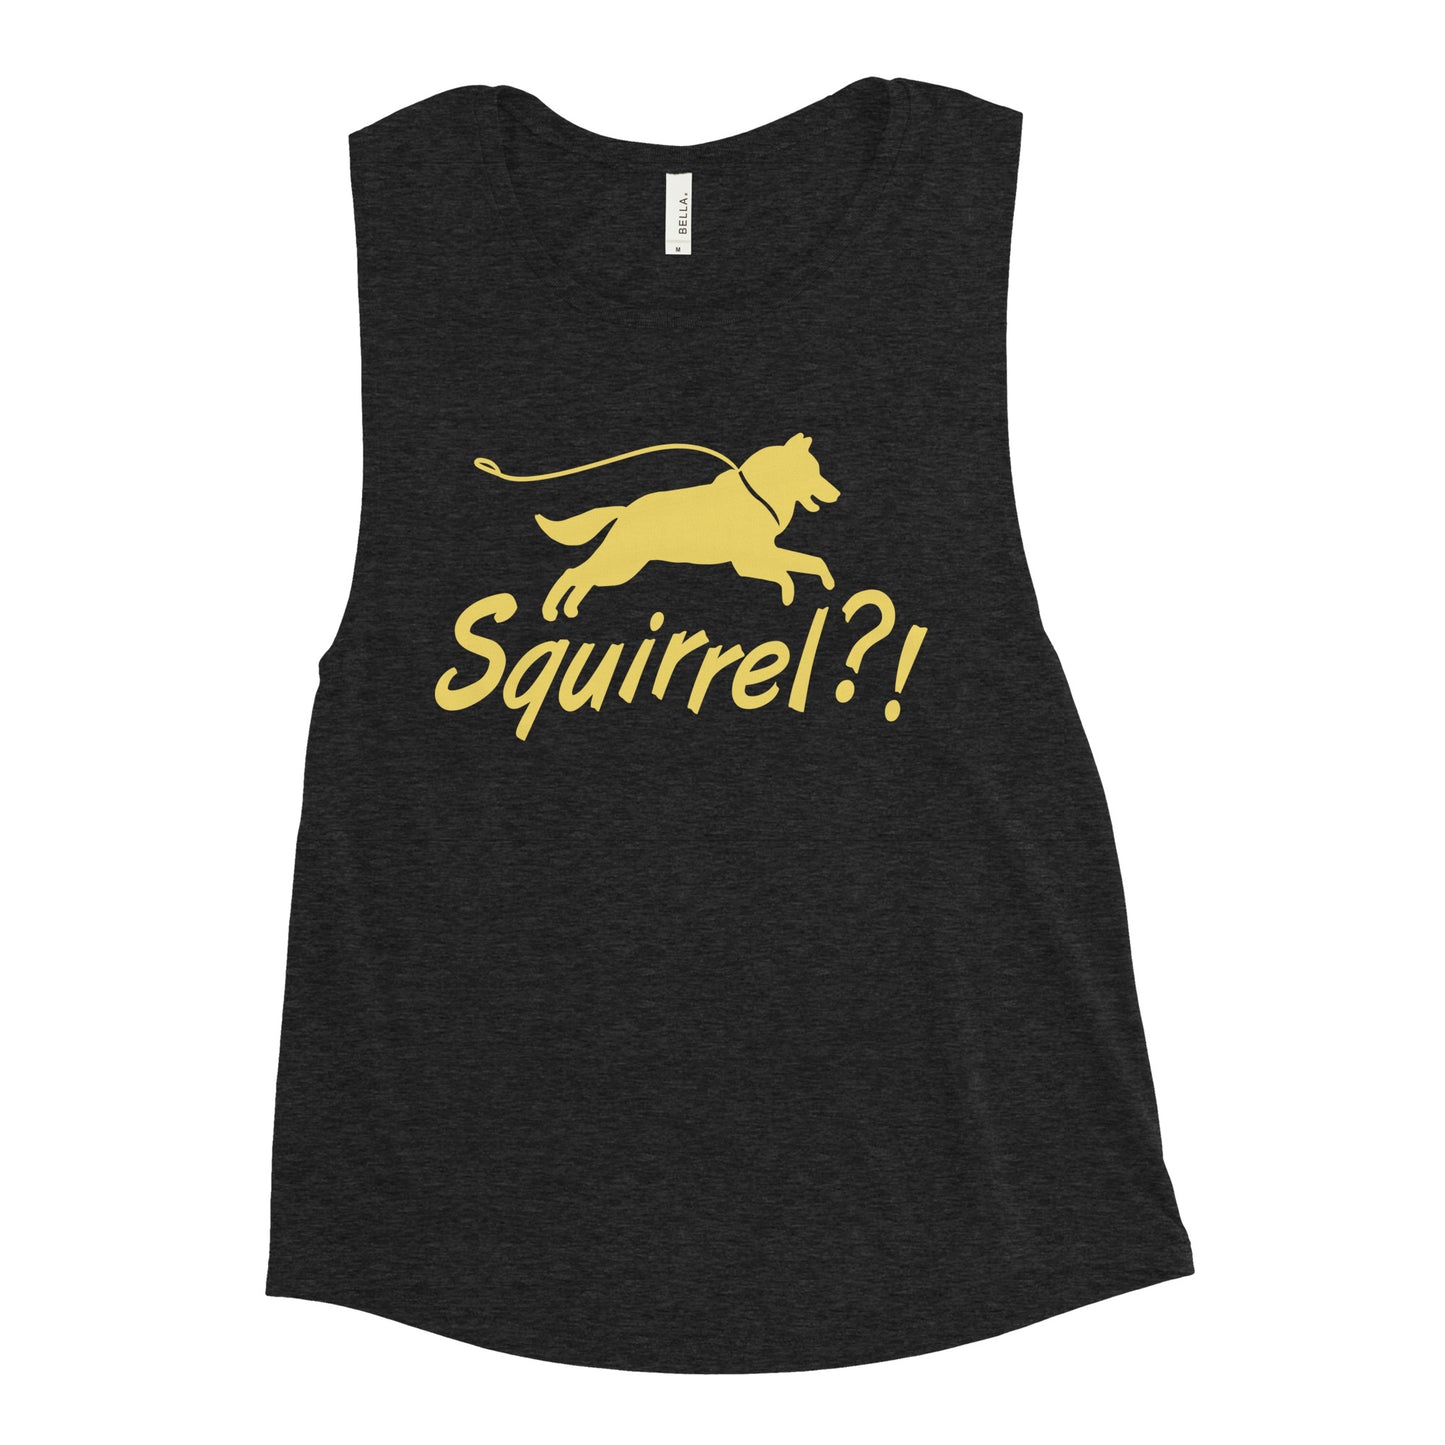 Squirrel?! Women's Muscle Tank